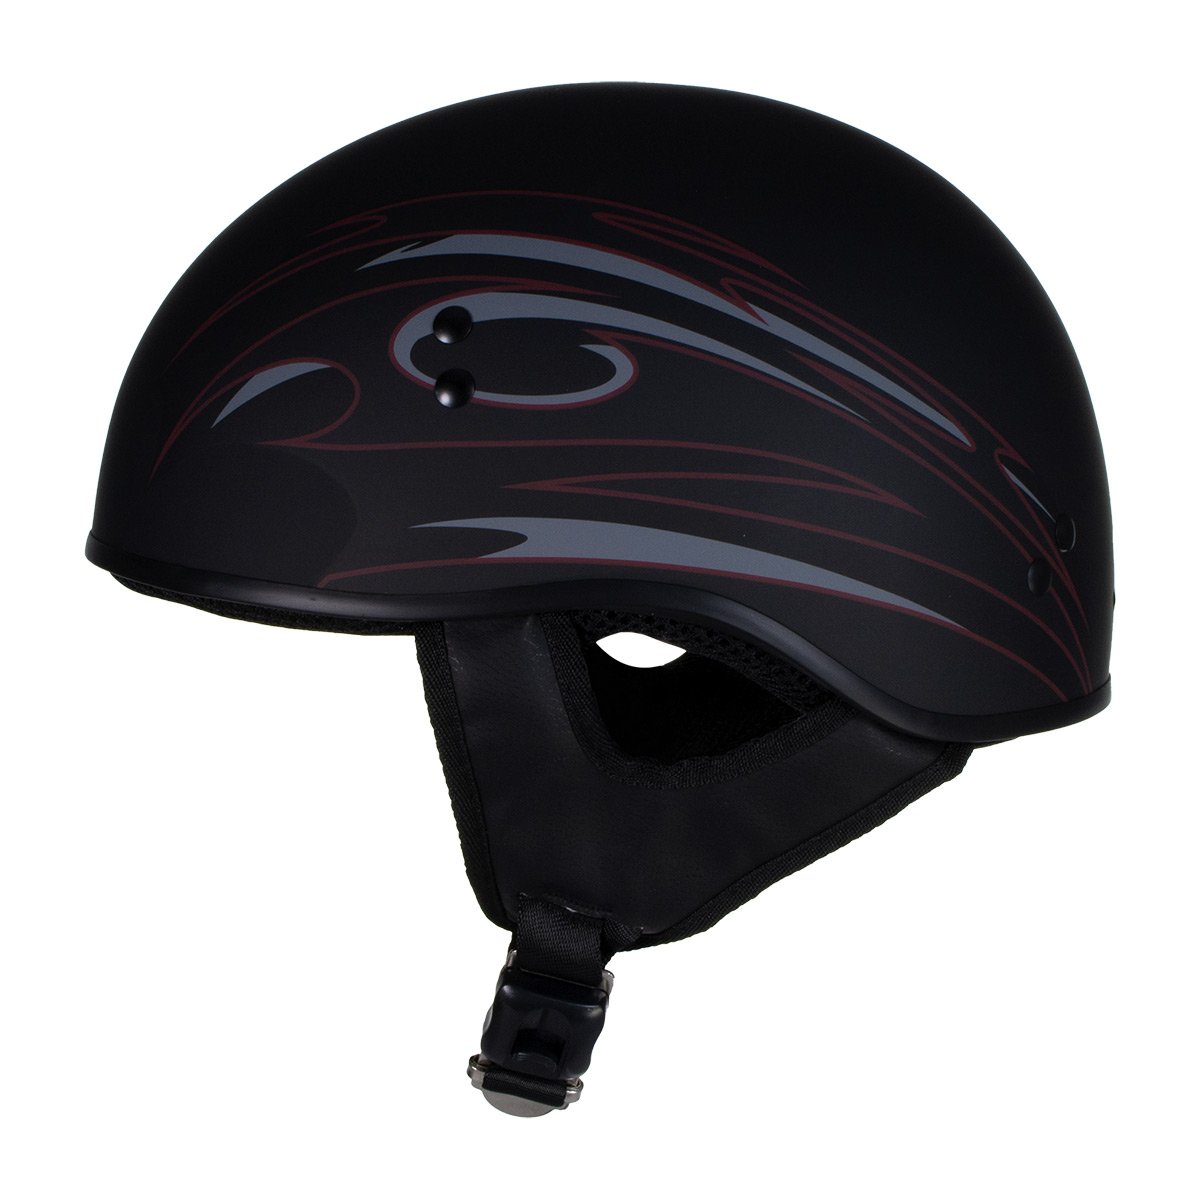 Hot Leathers T68 'Tribal Black' Advanced DOT Motorcycle Skull Cap Helmet